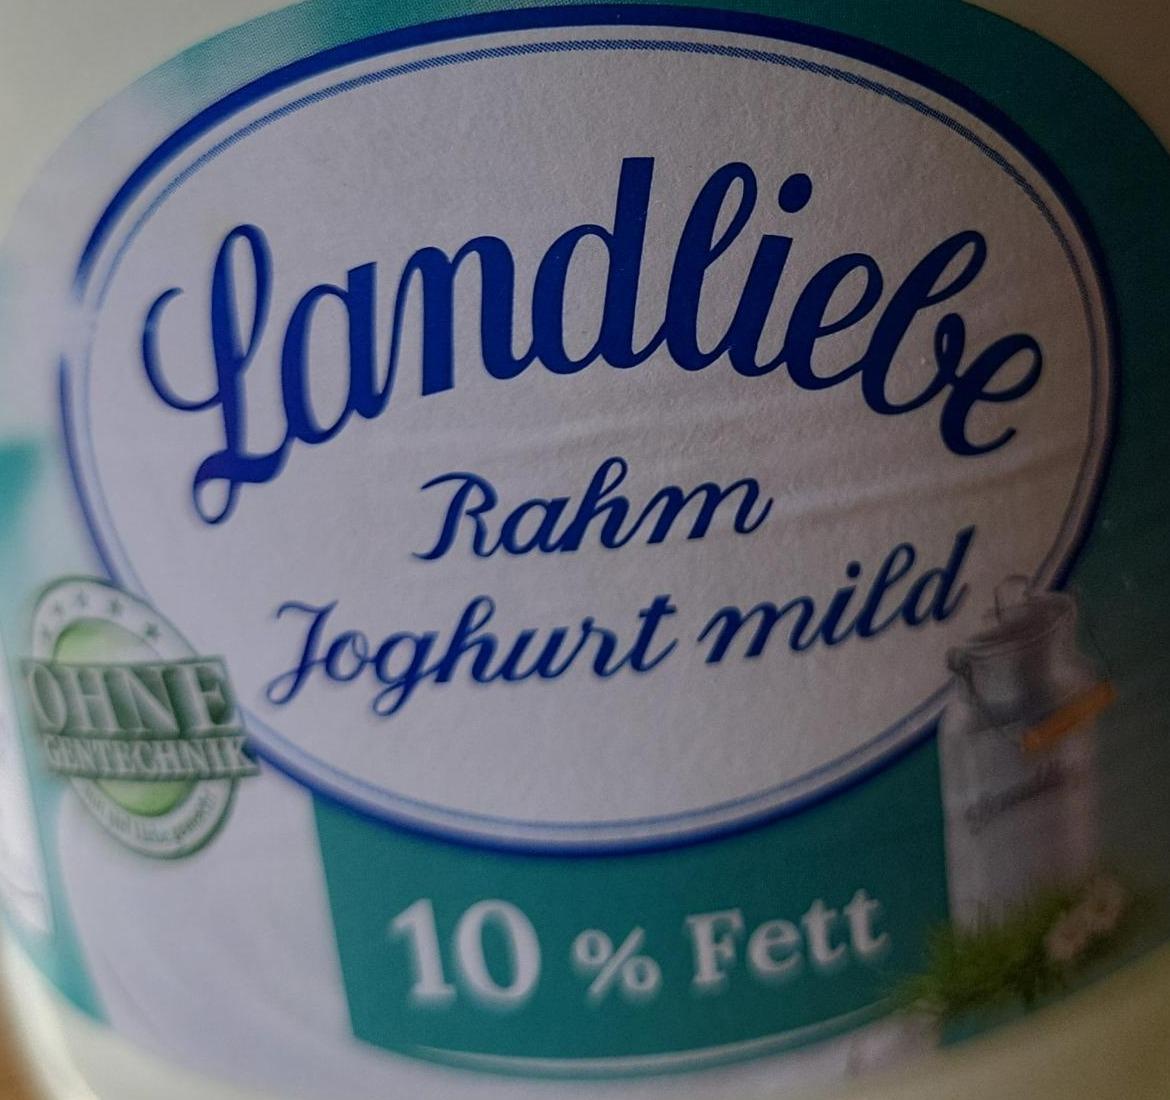 Фото - Rahm Joghurt mild 10% Fett Landliebe